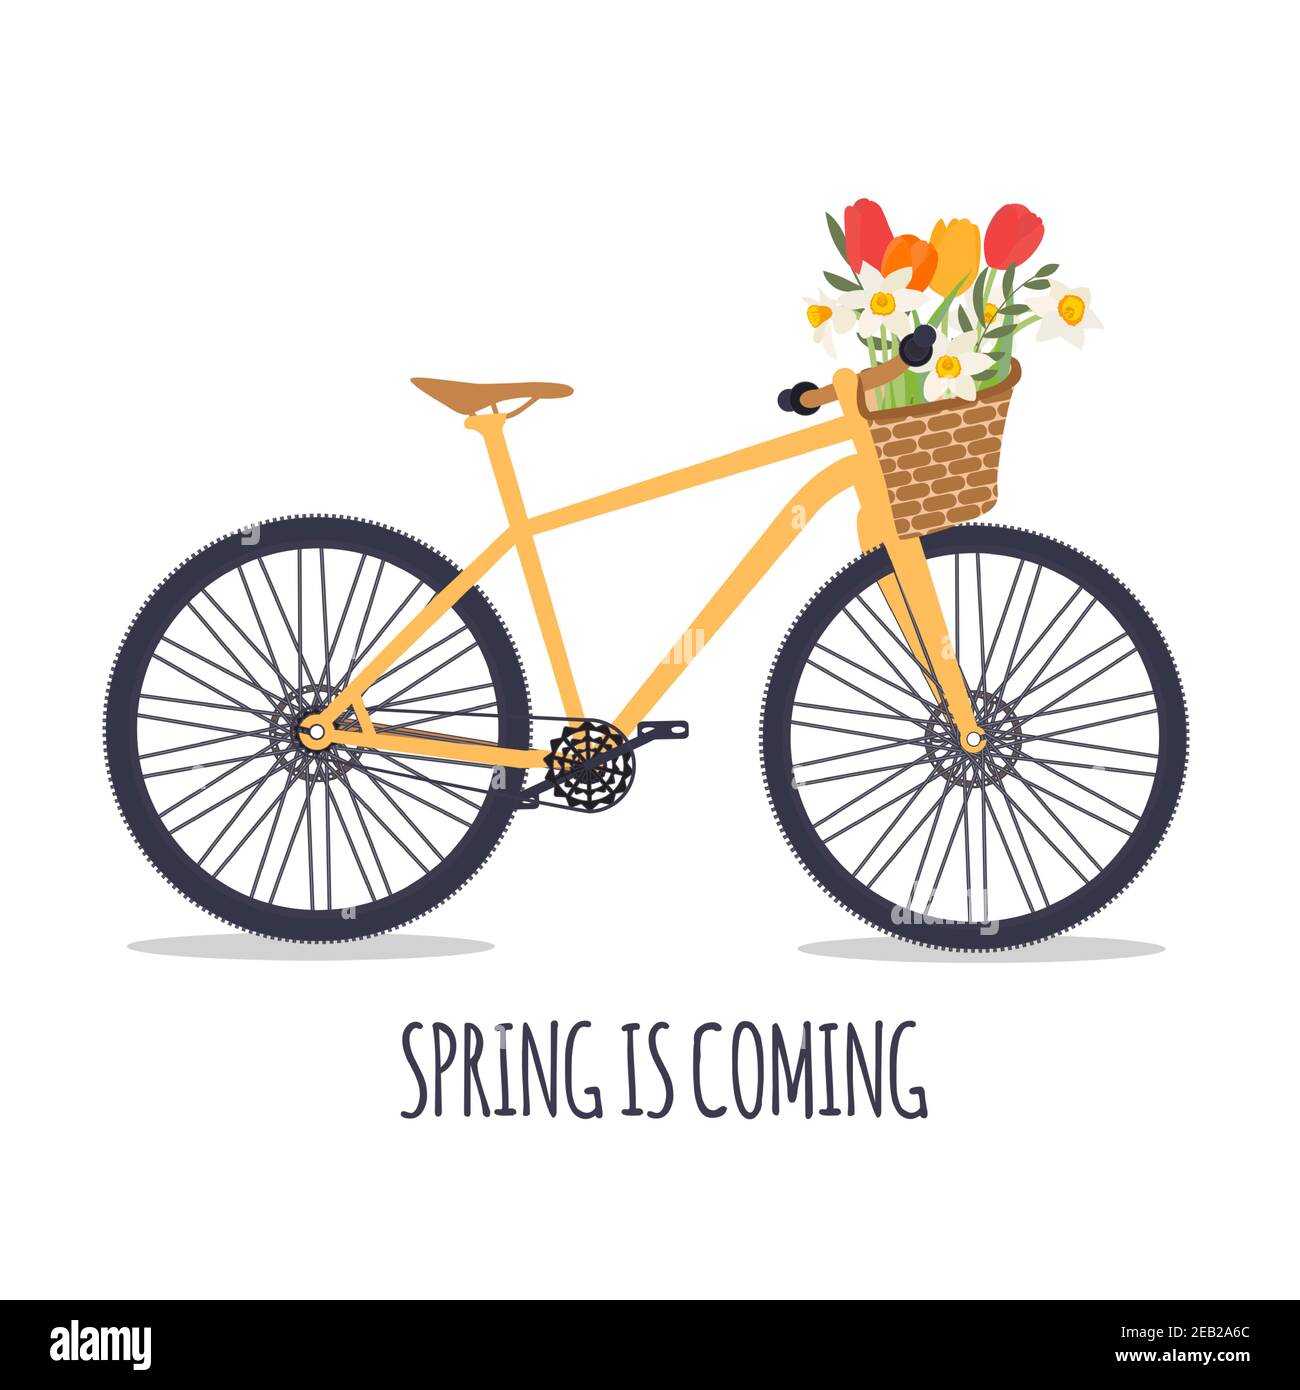 Fahrrad mit einem Blumenstrauß aus Frühlingsblumen. Vektorgrafik. EPS10 Stock Vektor